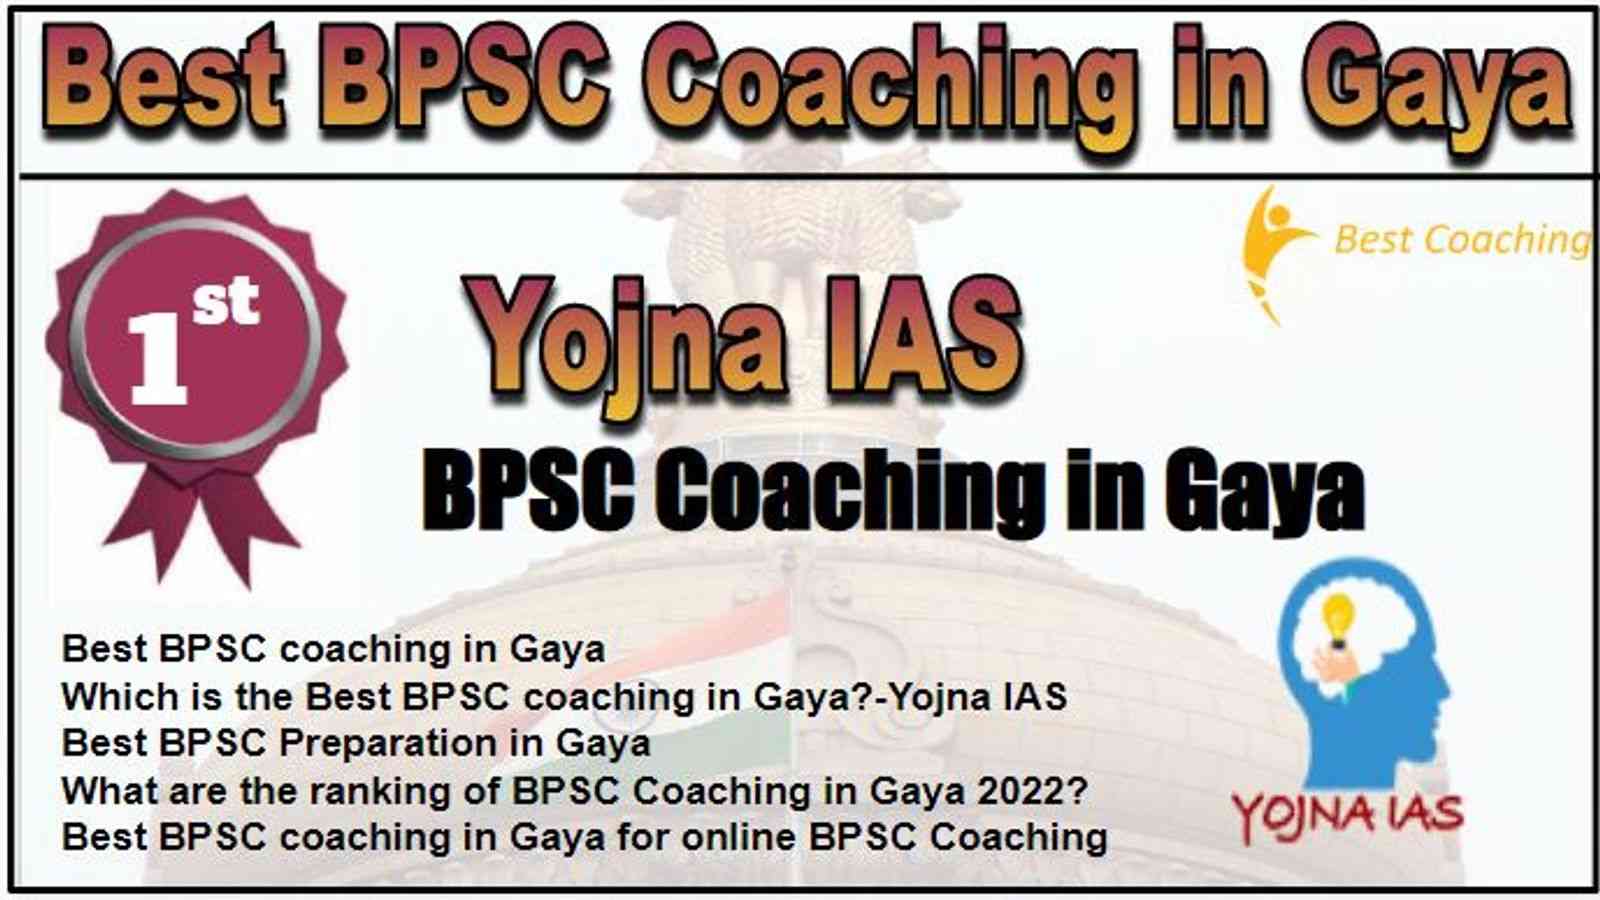 Rank 1 Best BPSC Coaching in Gaya